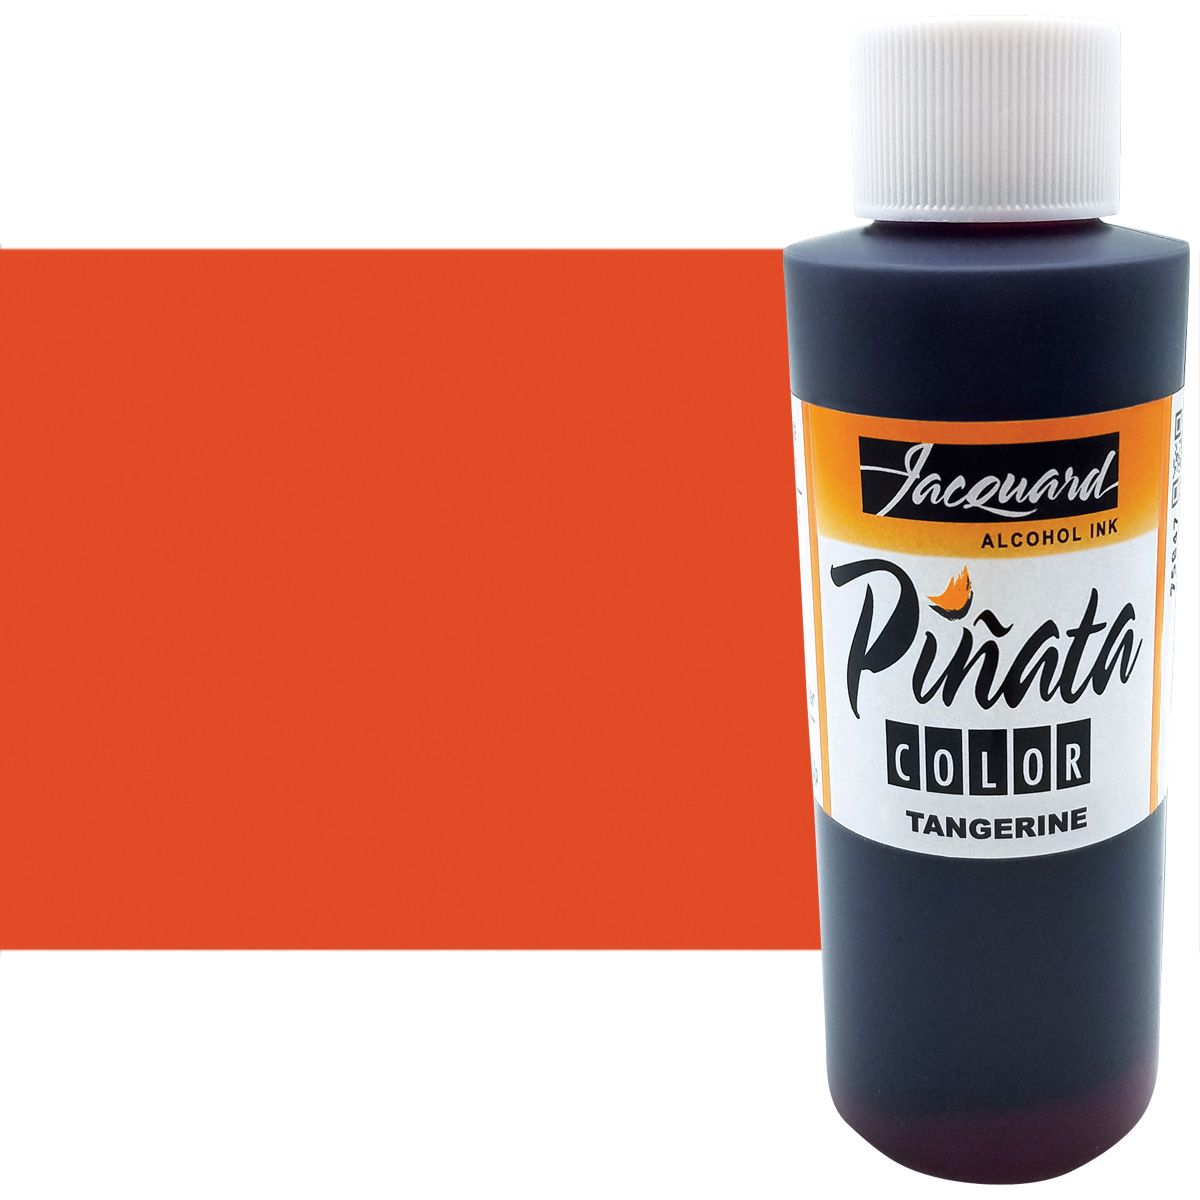 Jacquard : Pinata : Alcohol Ink : 4oz (118ml) : Tangerine 003 - Jacquard -  Brands